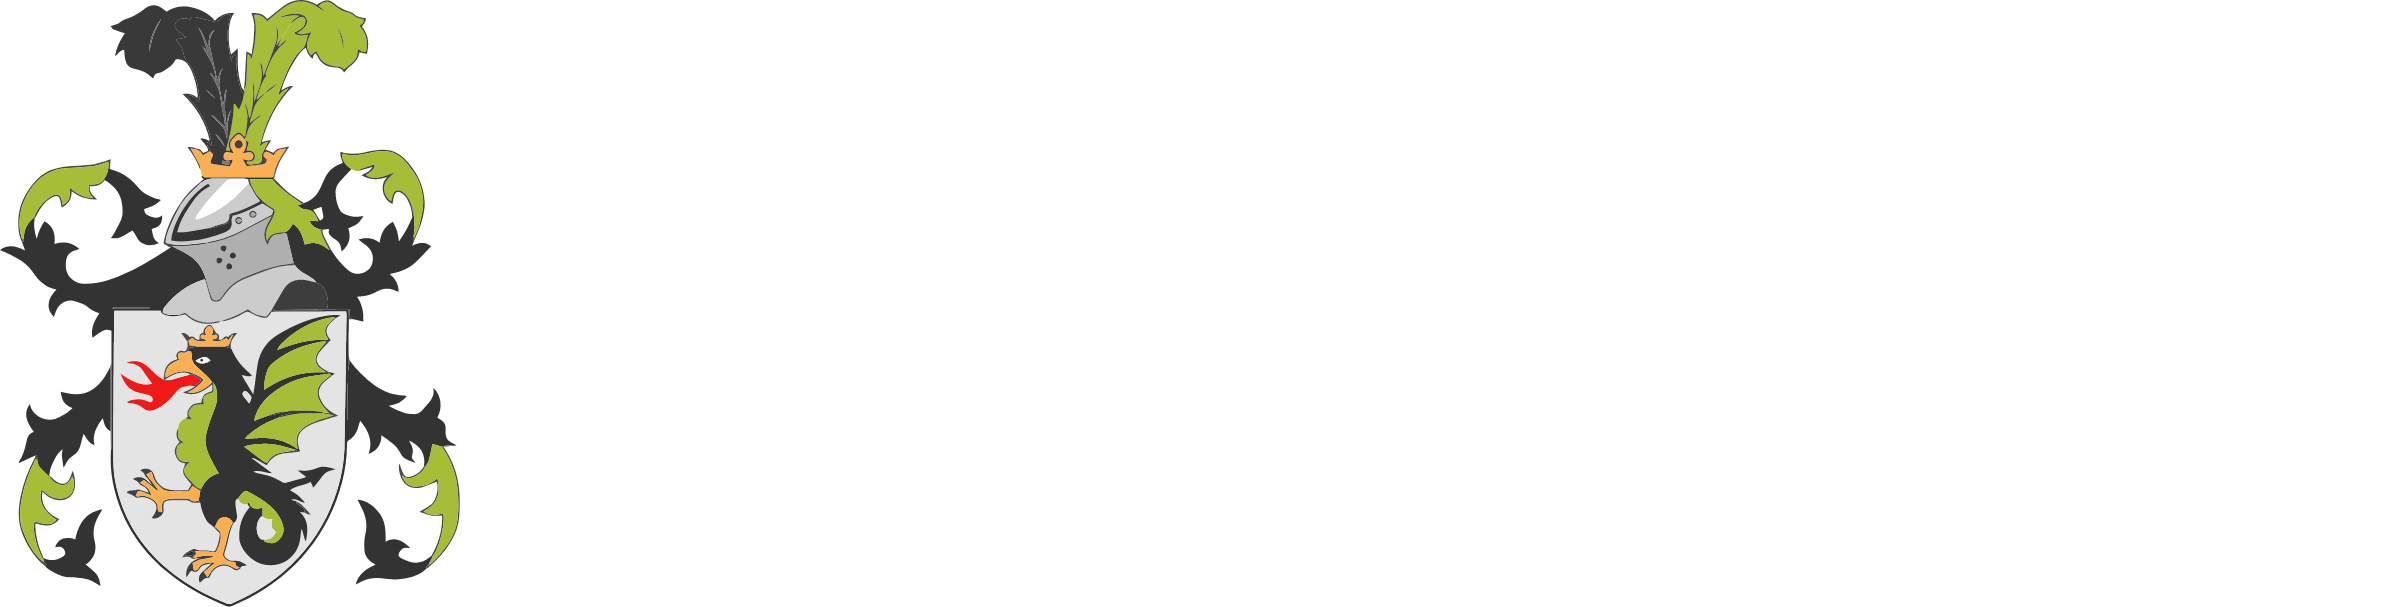 Malberg